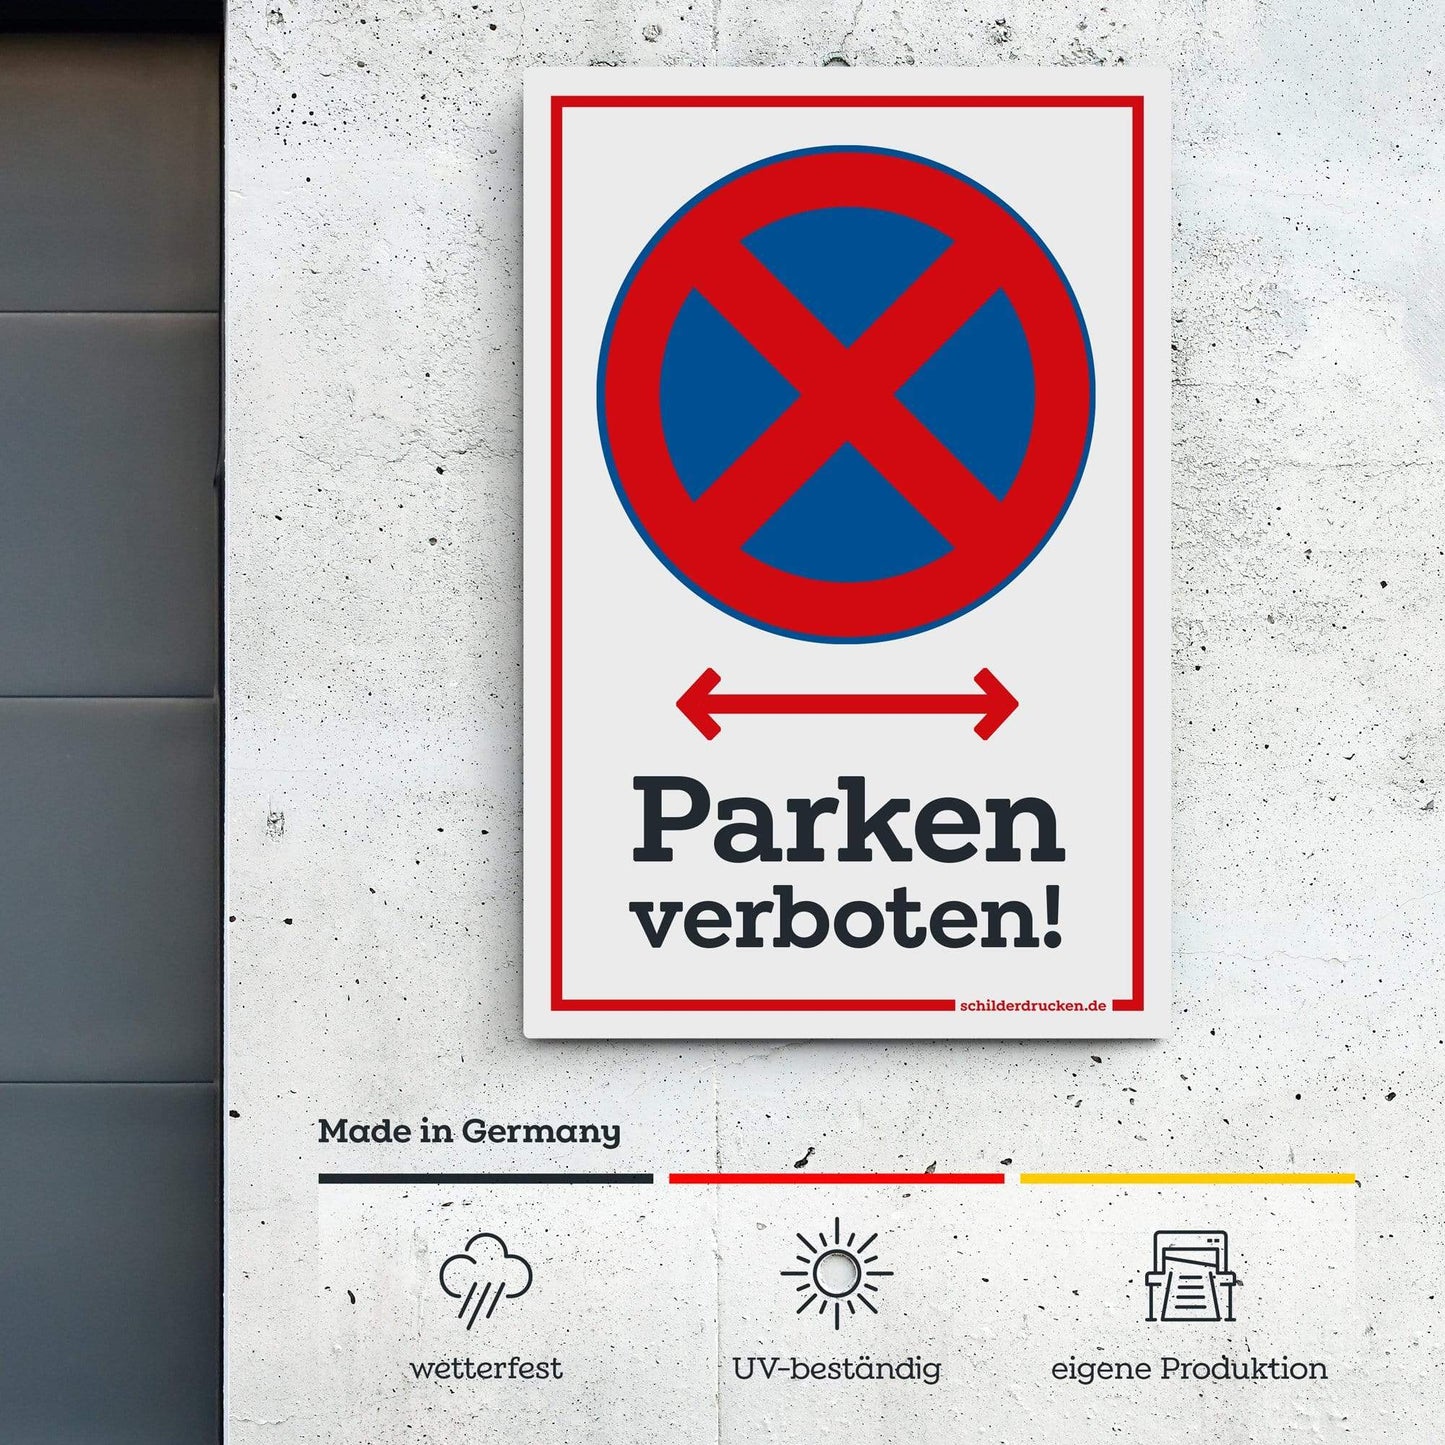 Parken verboten! 10 x 15 cm / weiss / Alu-Dibond online drucken lassen bei schilderdrucken.de